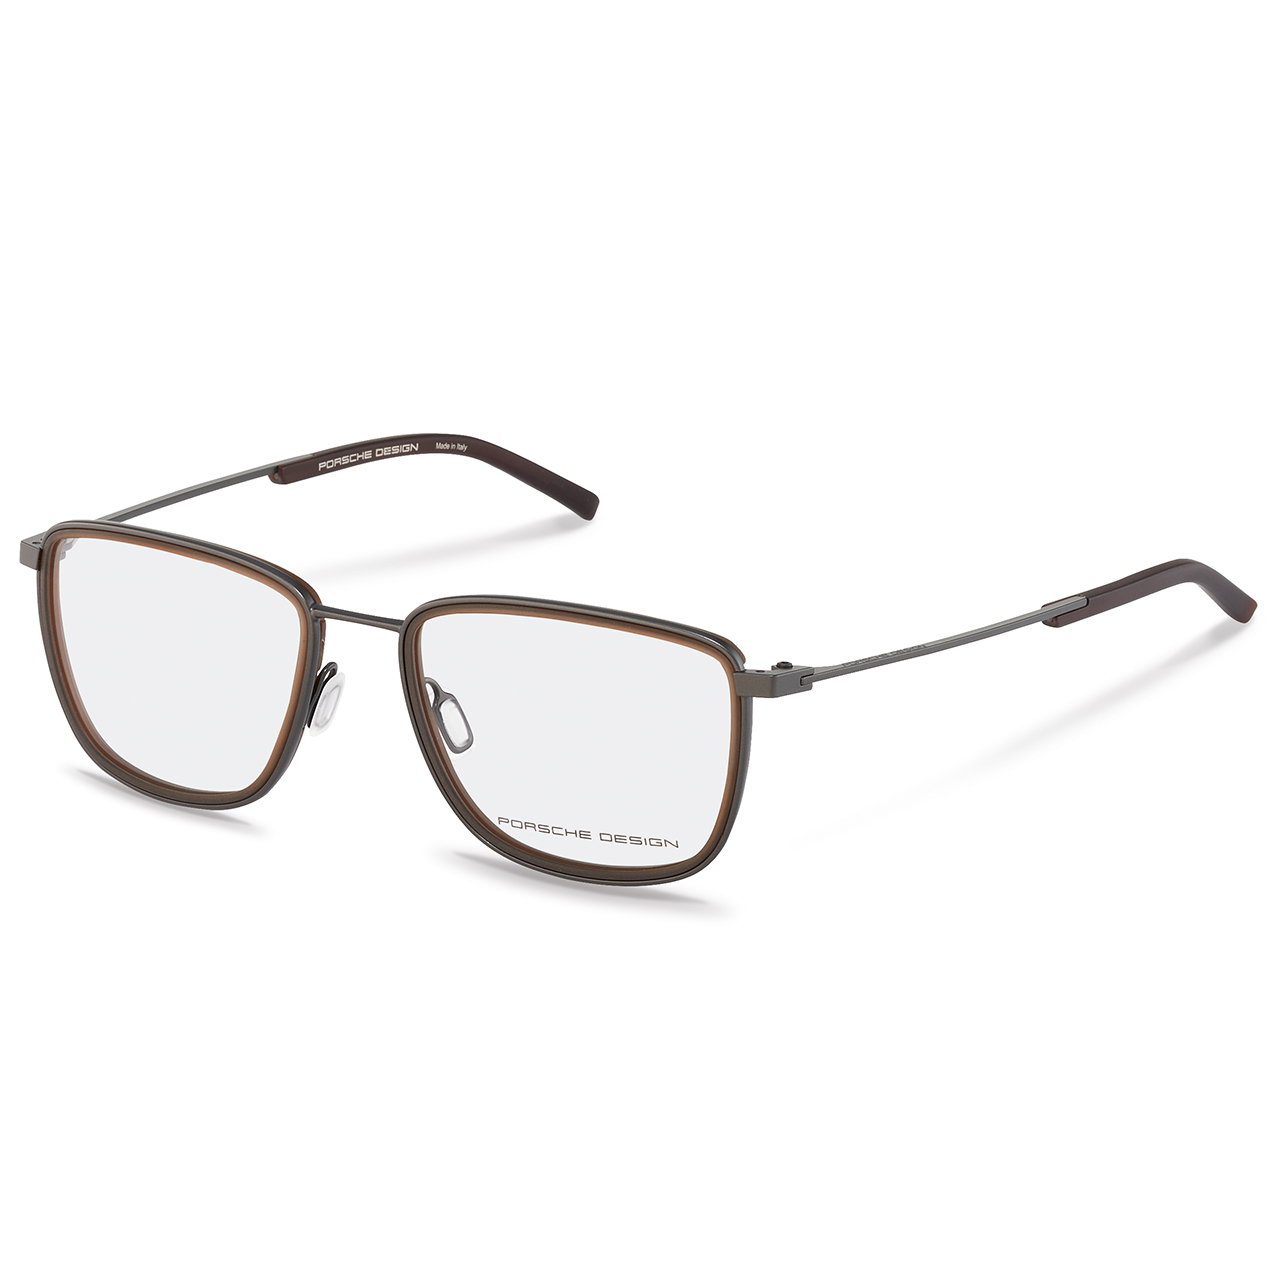 NEW Porsche Design P8285 C 56mmSatin Titanium Grey Optical Eyeglasses Frames 